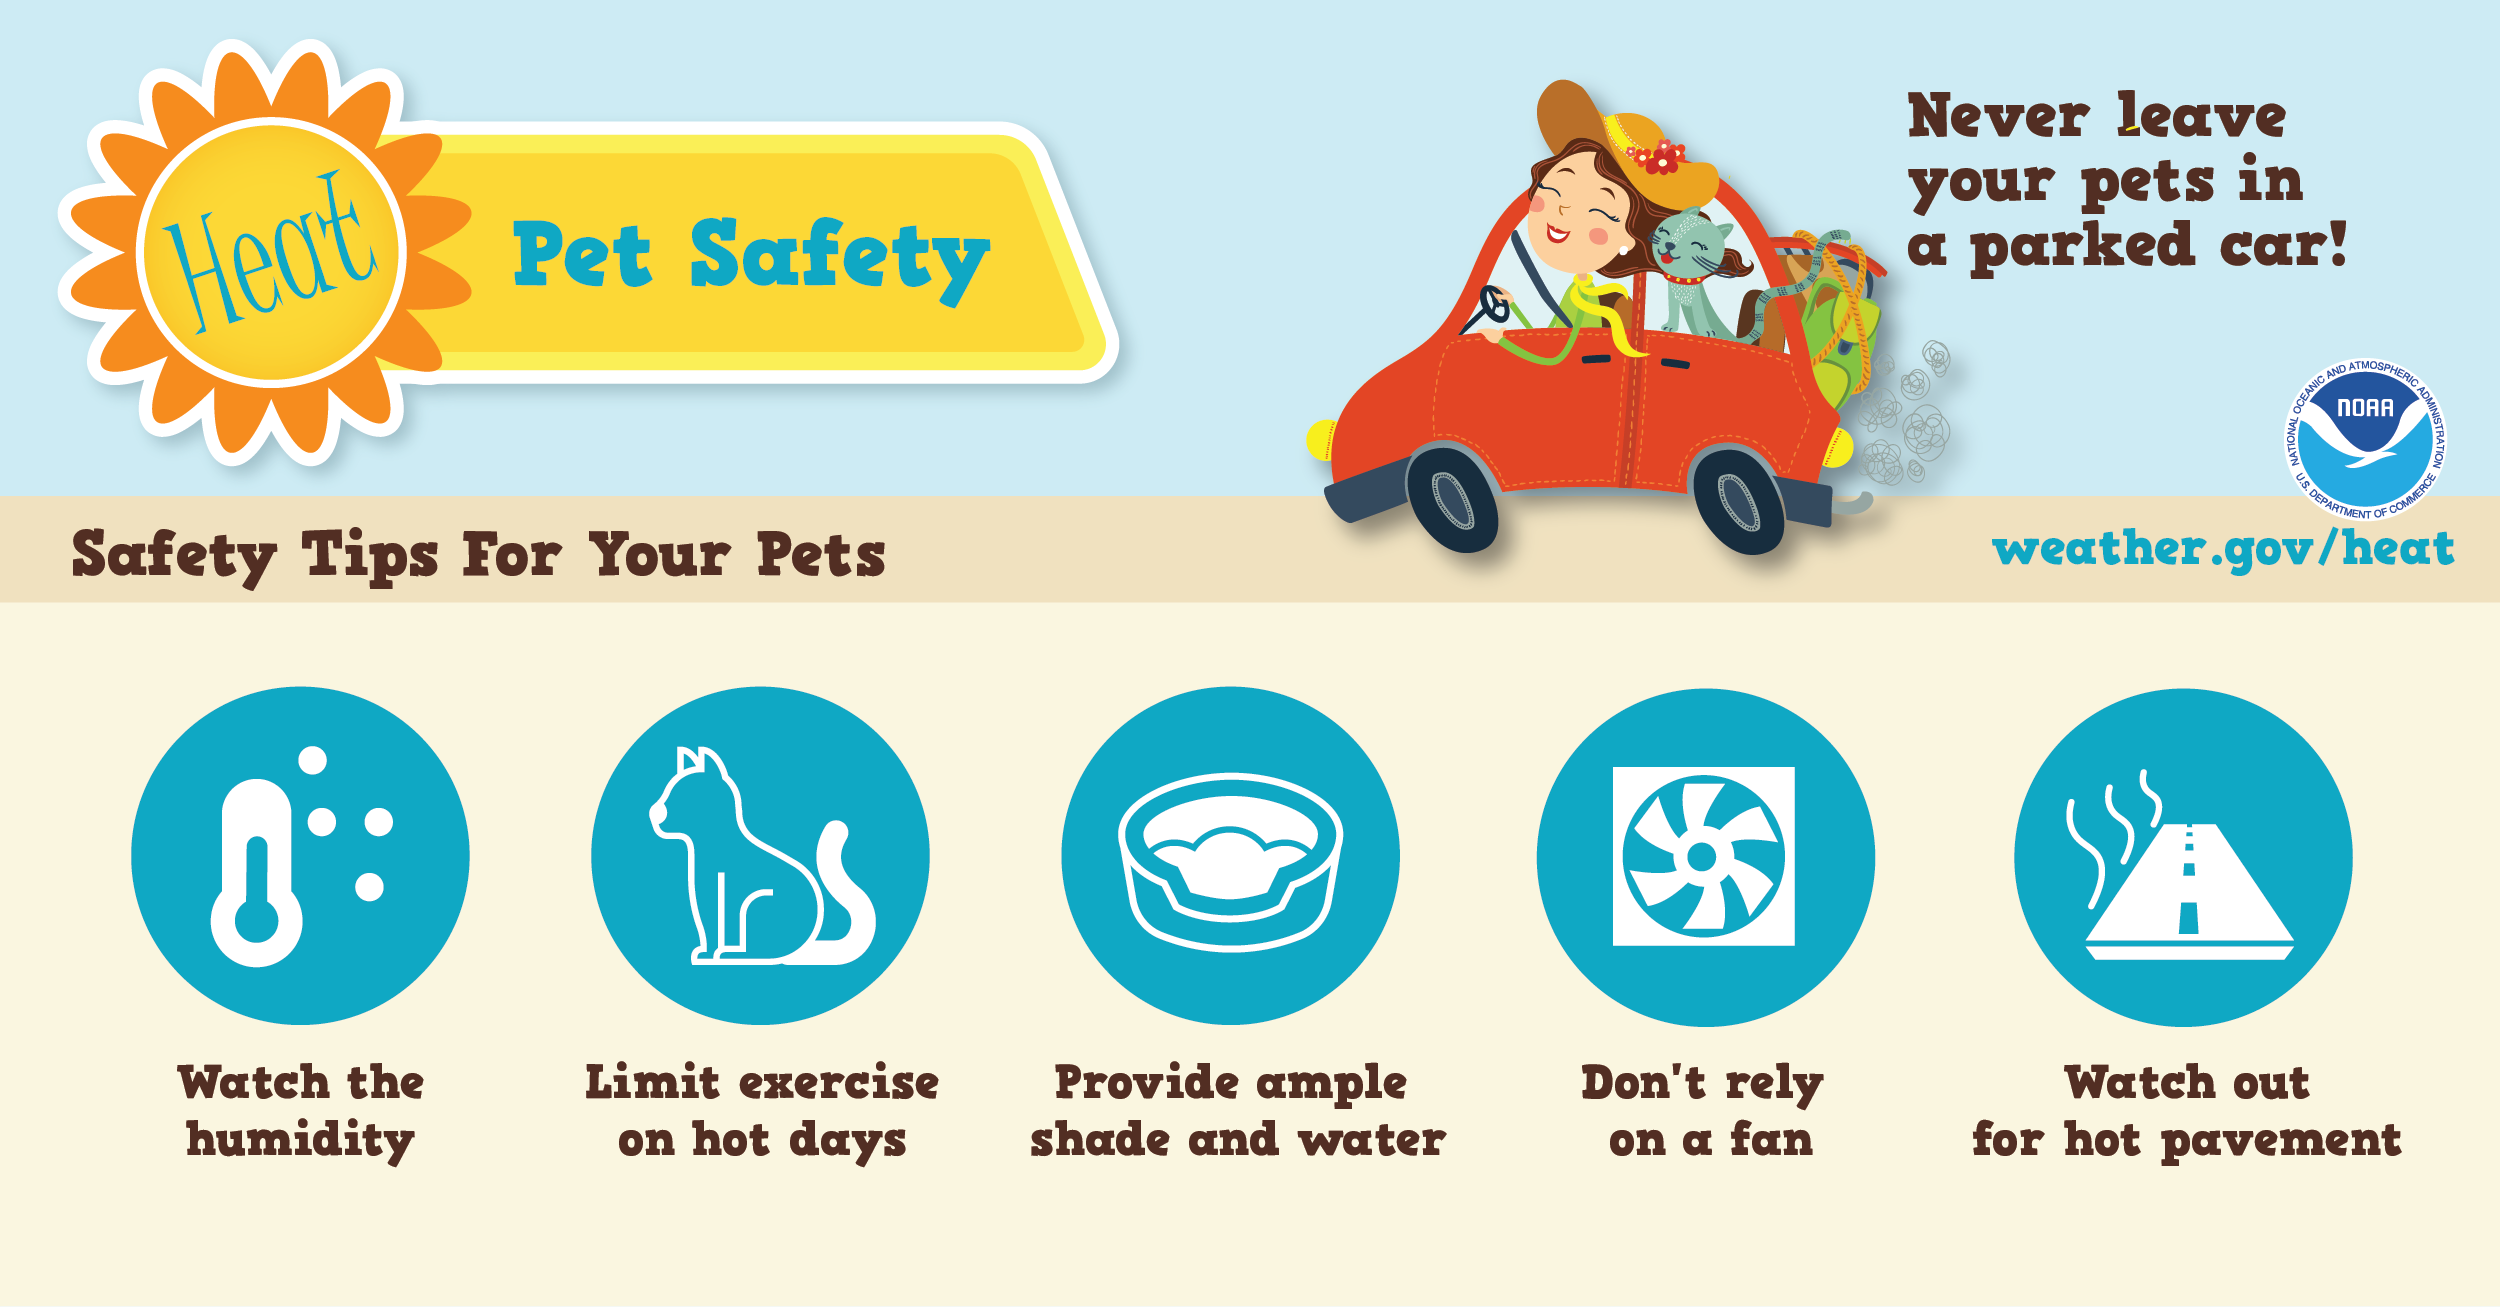 Heat - Pet Safety 2